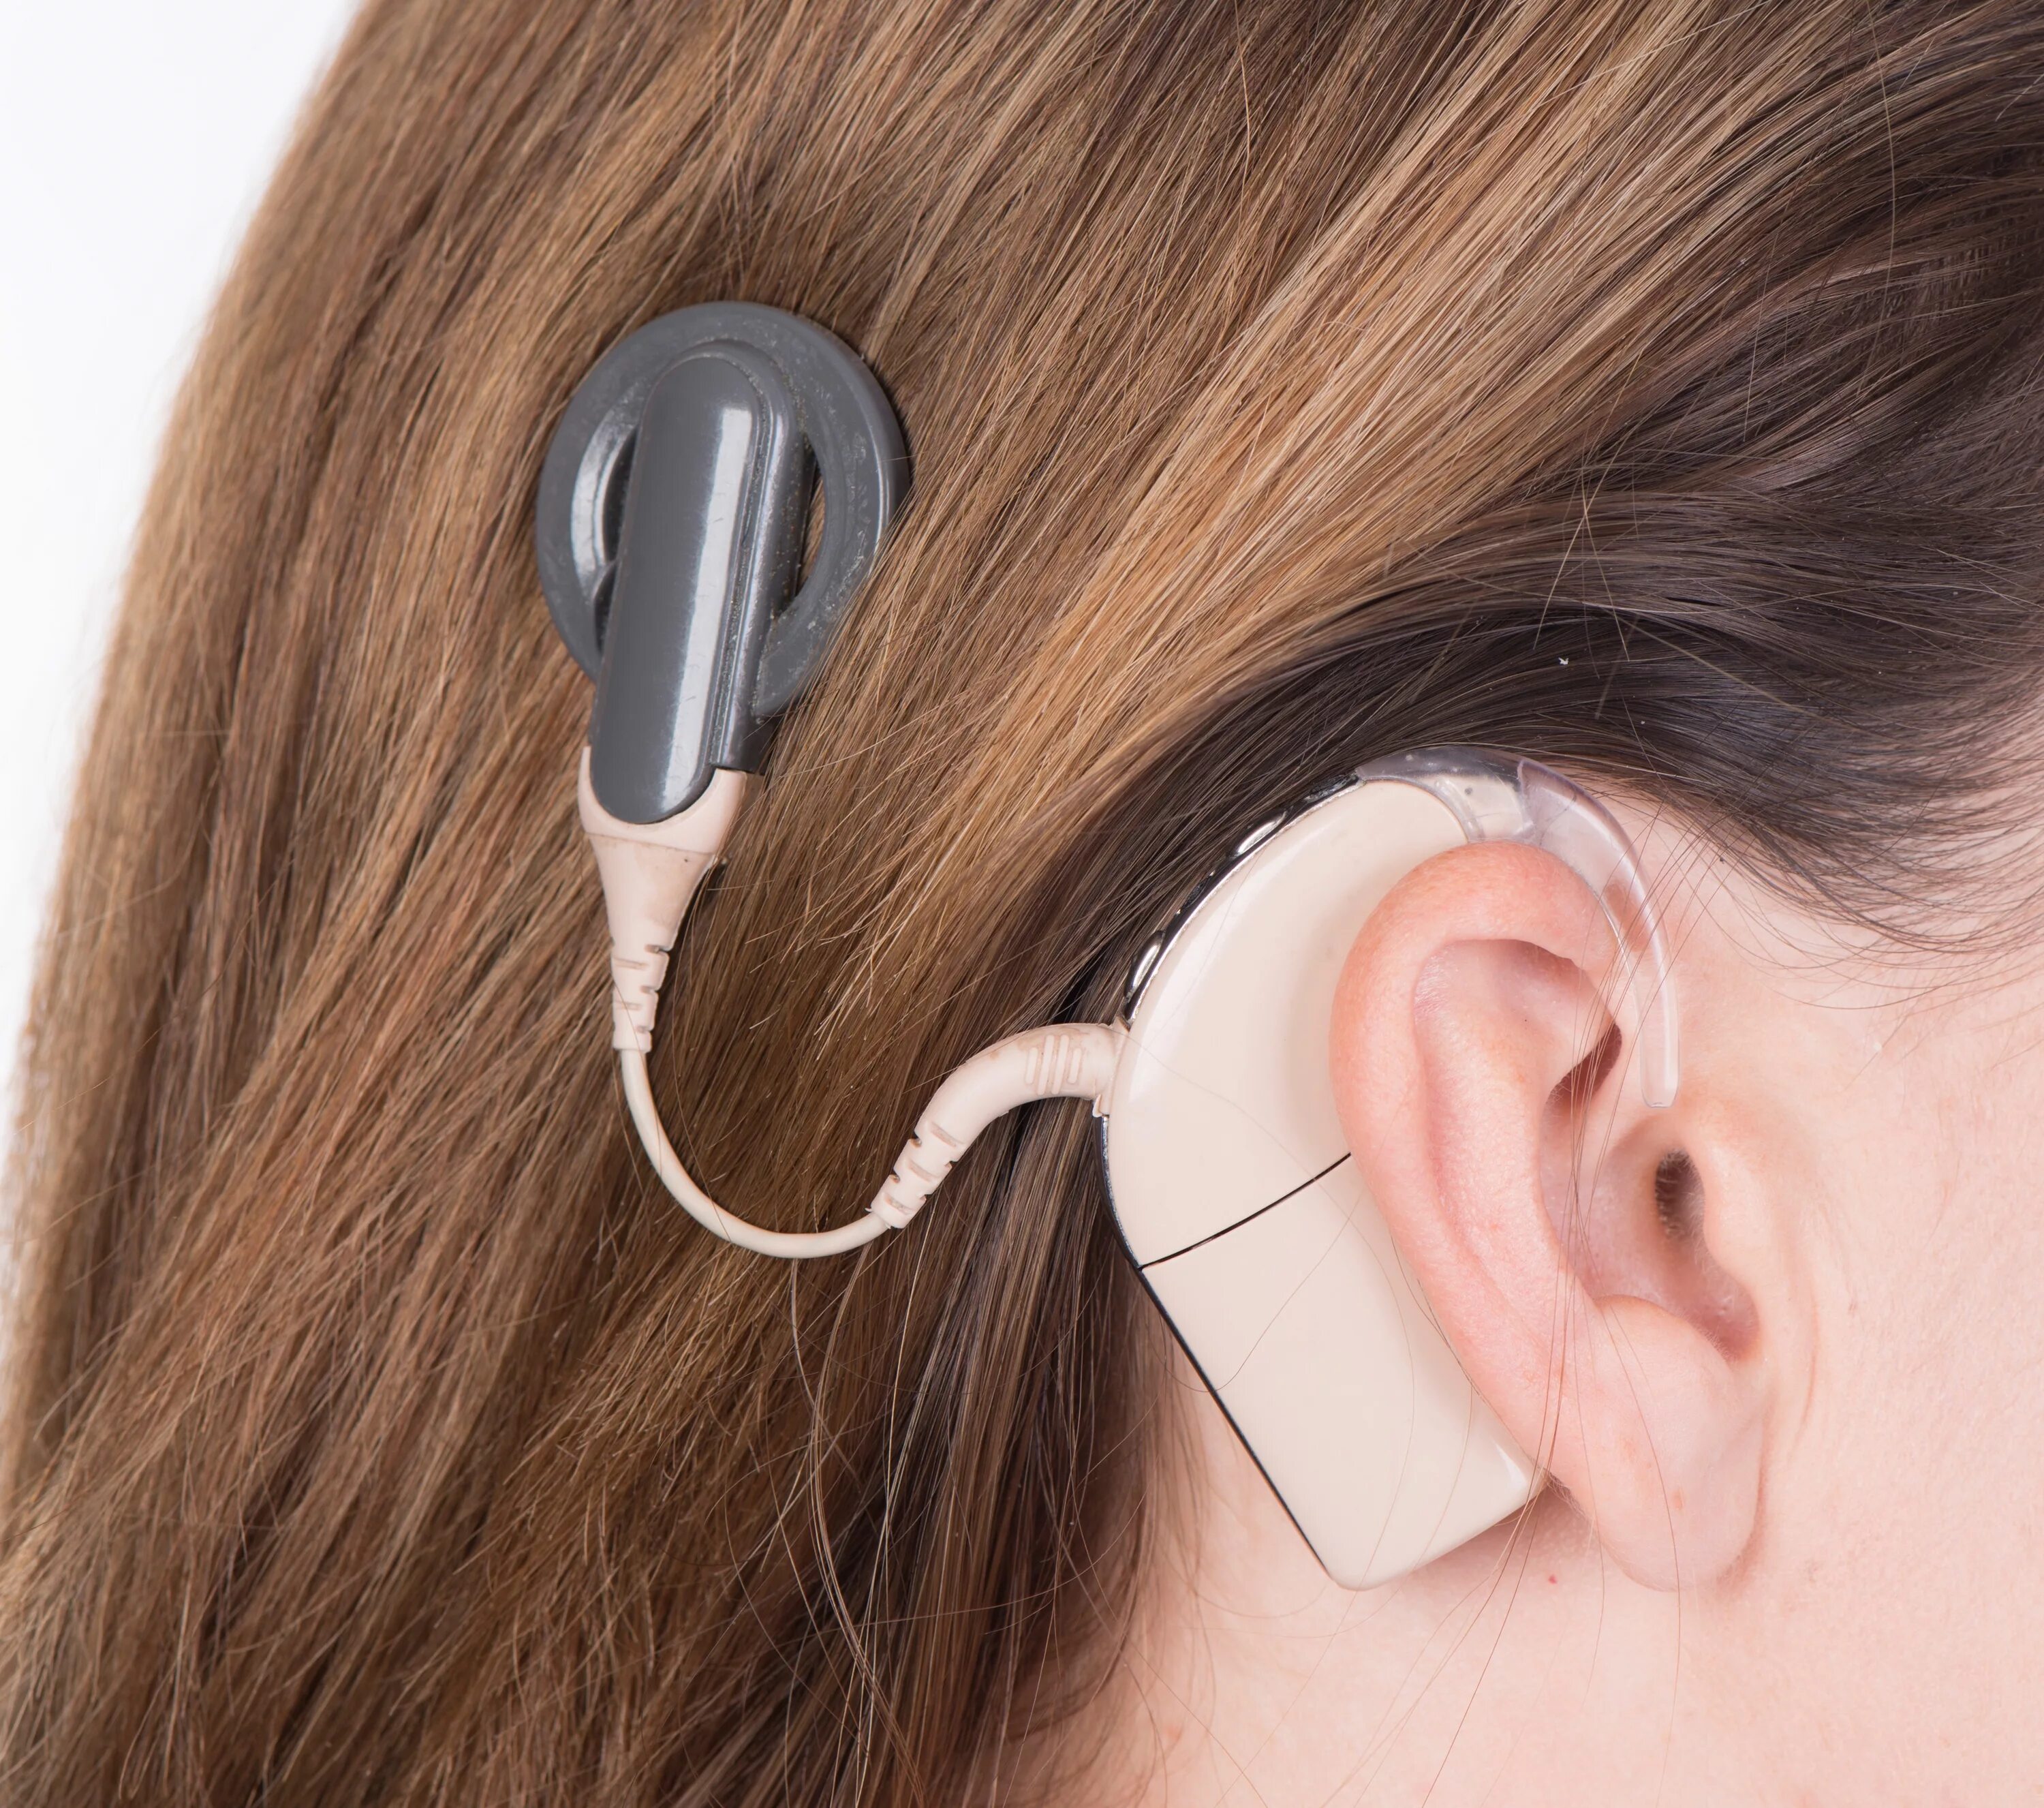 Аппарат Cochlear кохлеарный. Кохлеарный имплант кохлеар. Слуховой аппарат кохлеарный имплант. Слуховой аппарат Кохлер имплант. Слуховой аппарат внутреннего уха